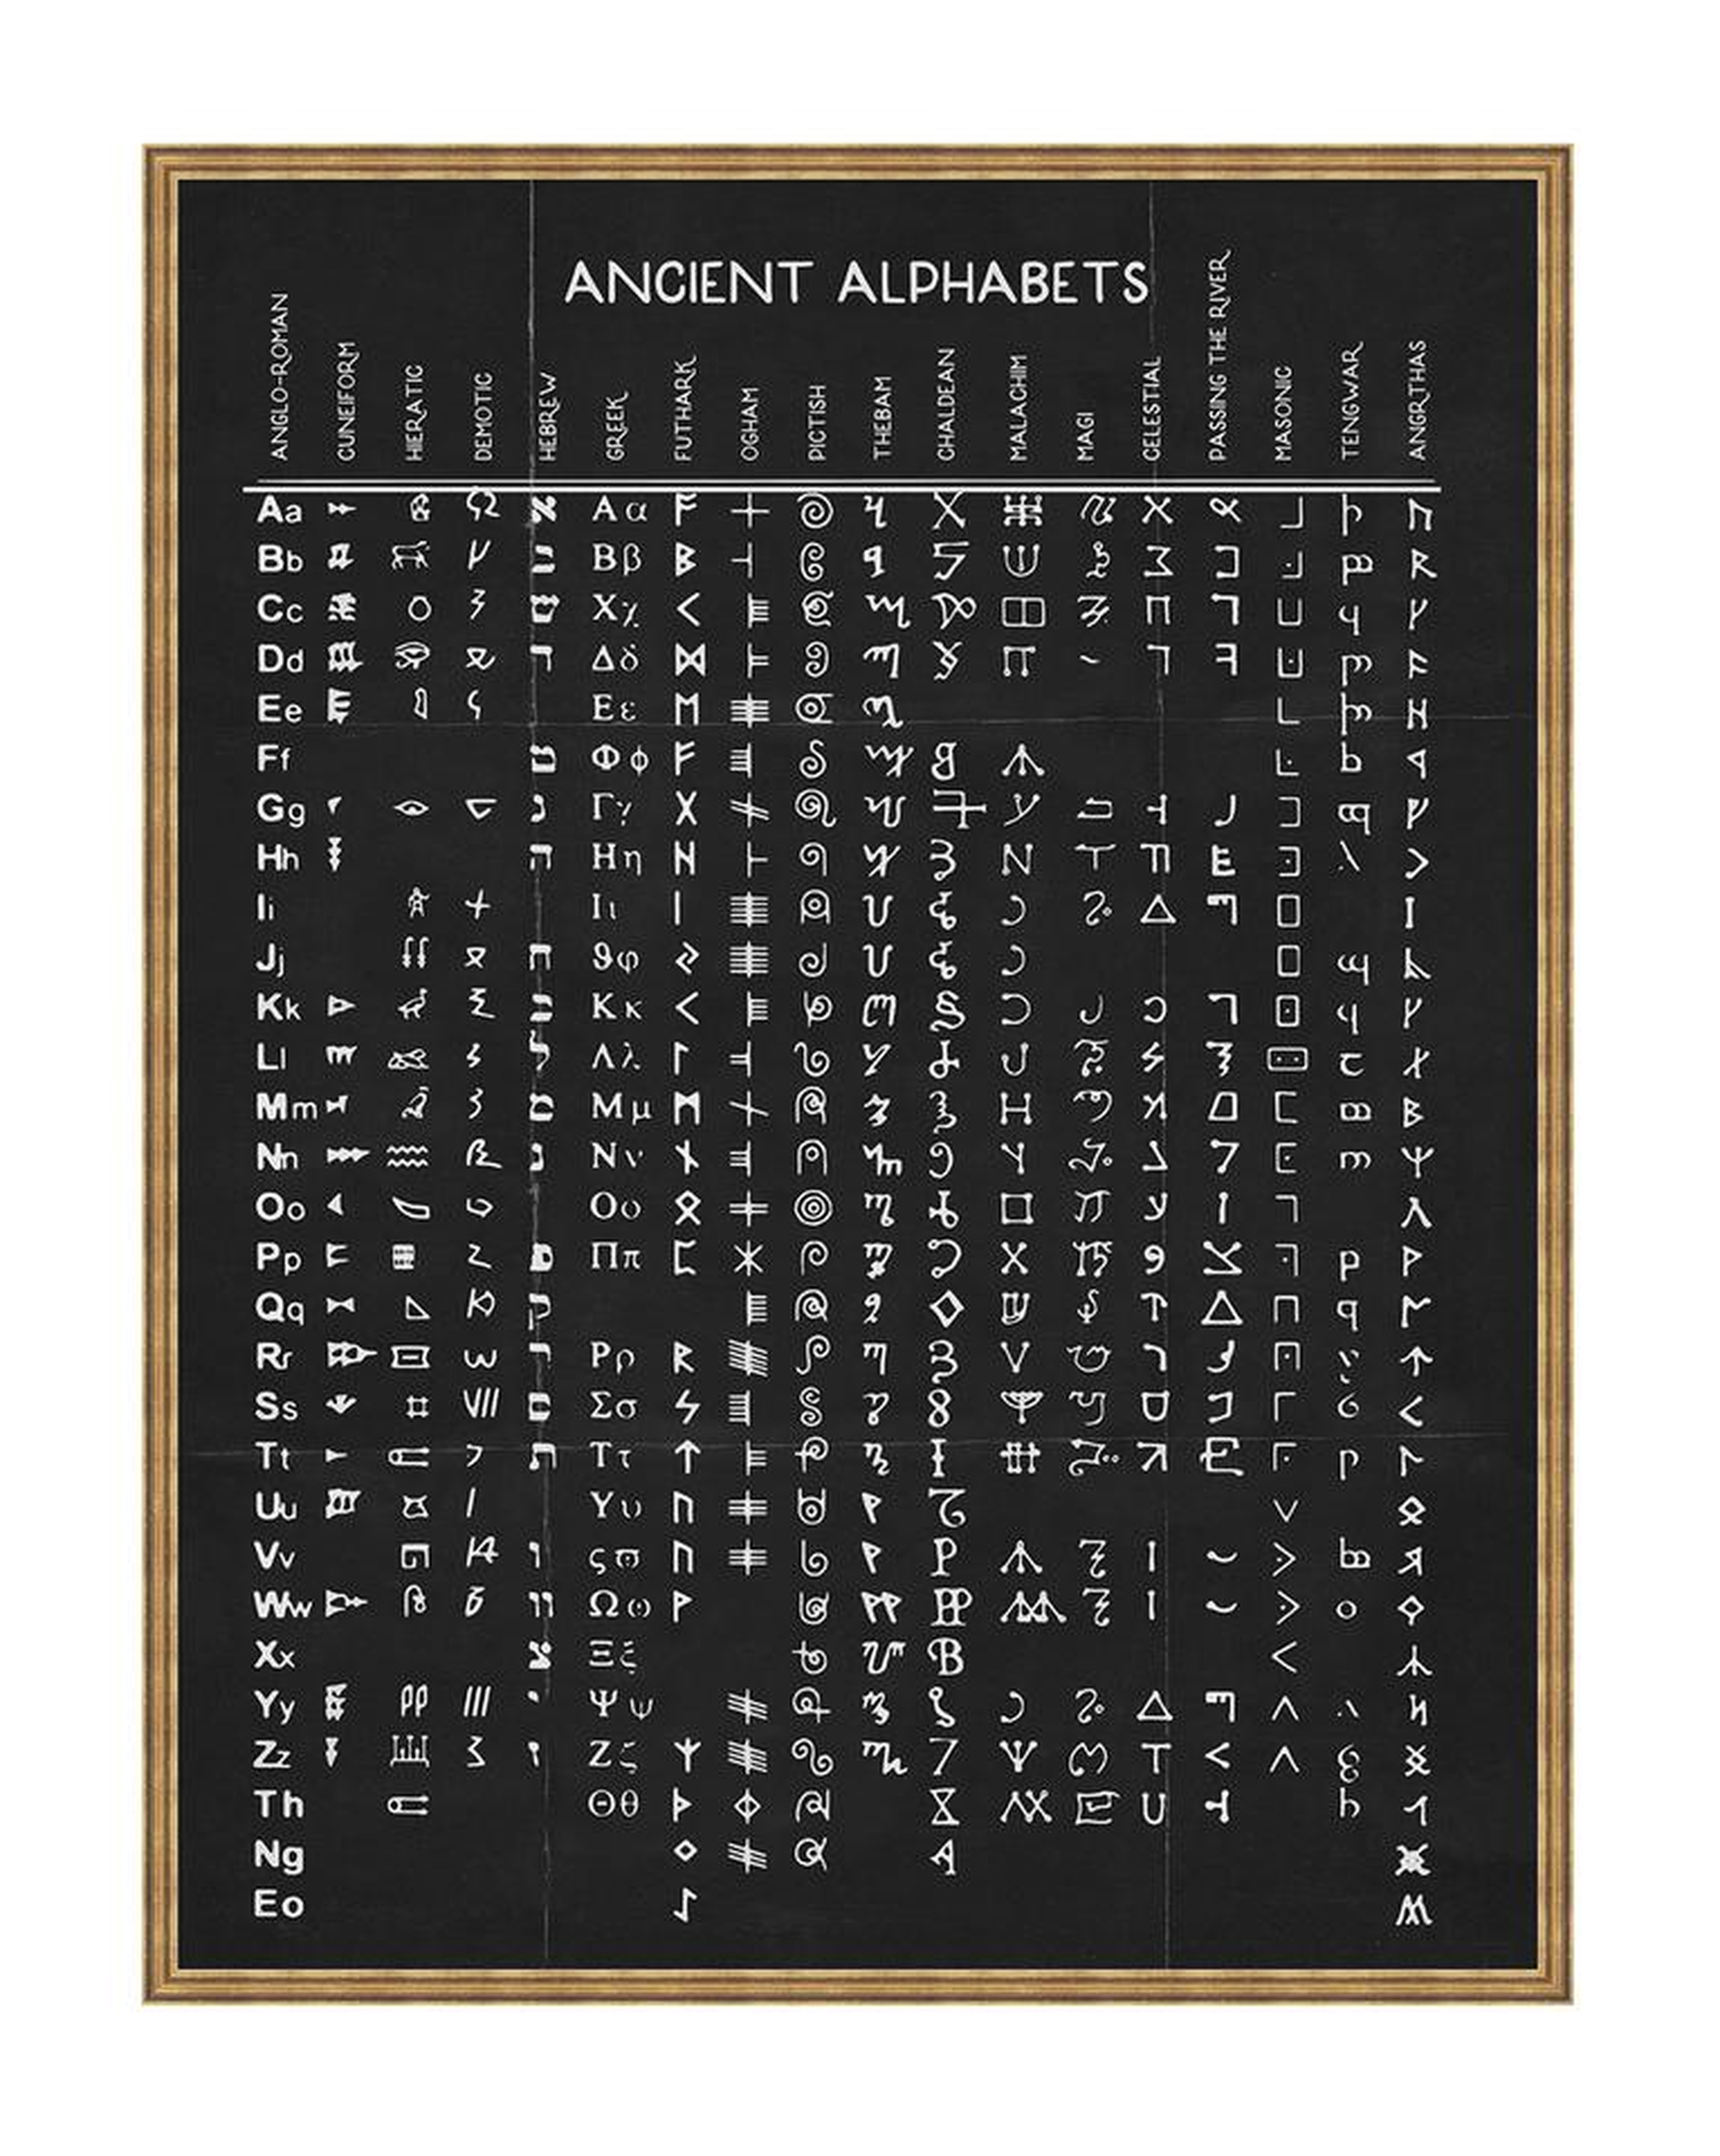 ANCIENT ALPHABETS Framed Art - McGee & Co.